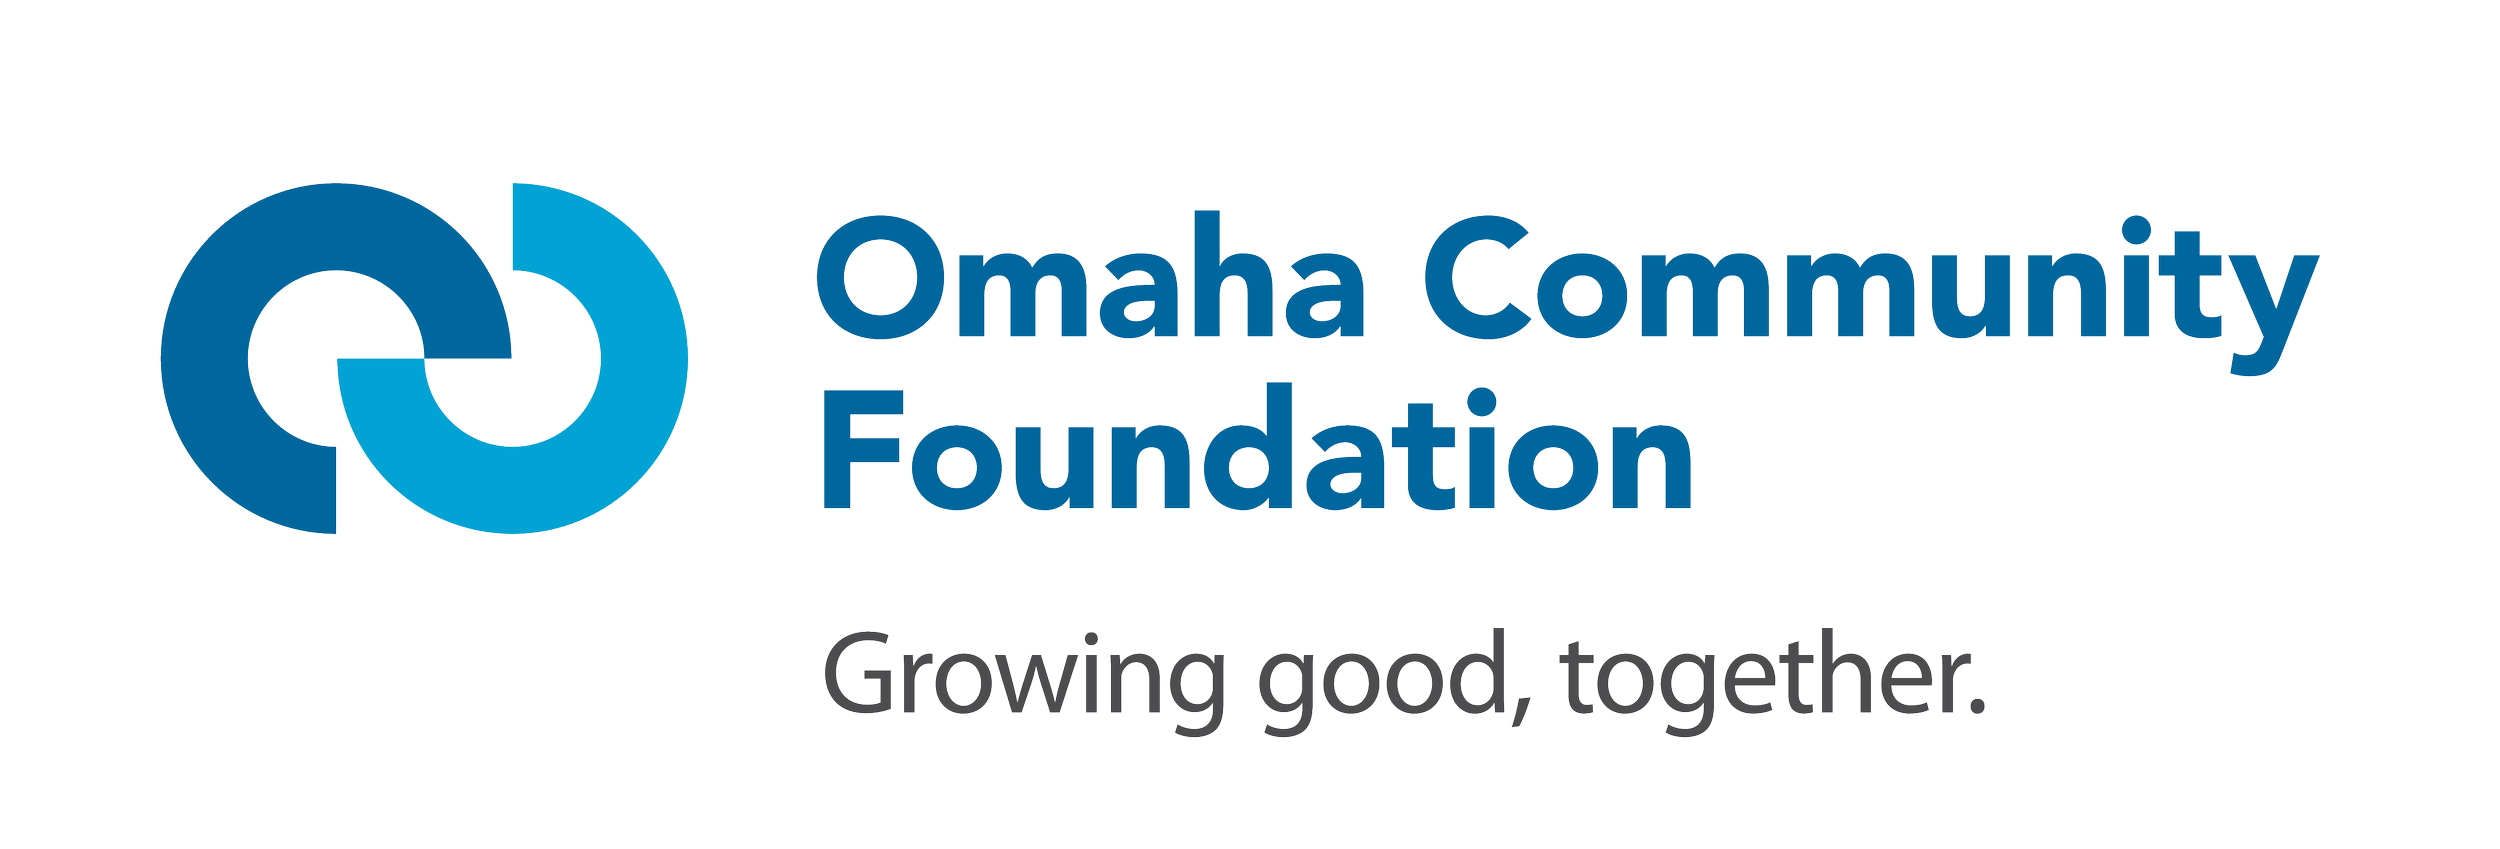 Omaha Community Foundation Logo - Horizontal Tagline Full Color CMYK-4400x1495-fdd9dd9.png